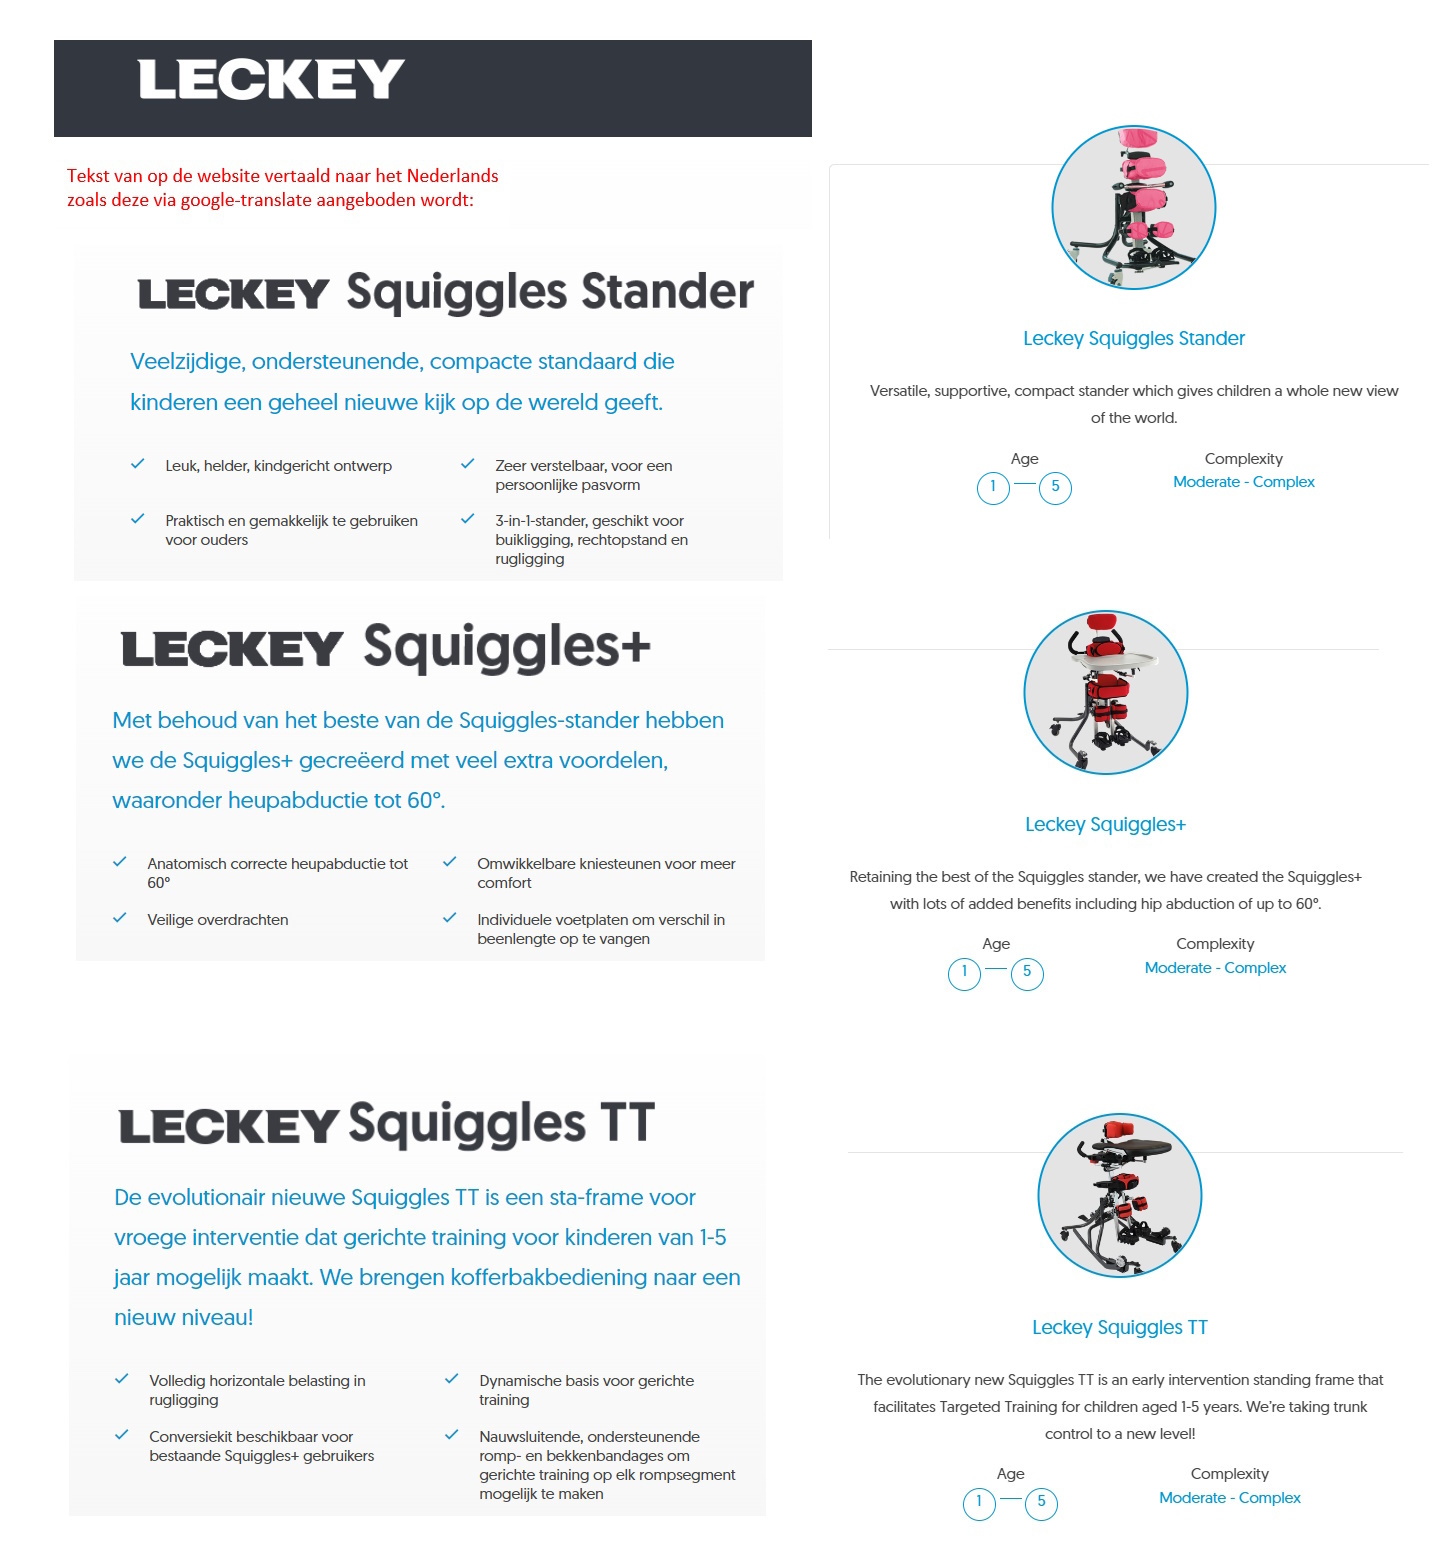 toegevoegd document 2 van Leckey Squiggles stander  